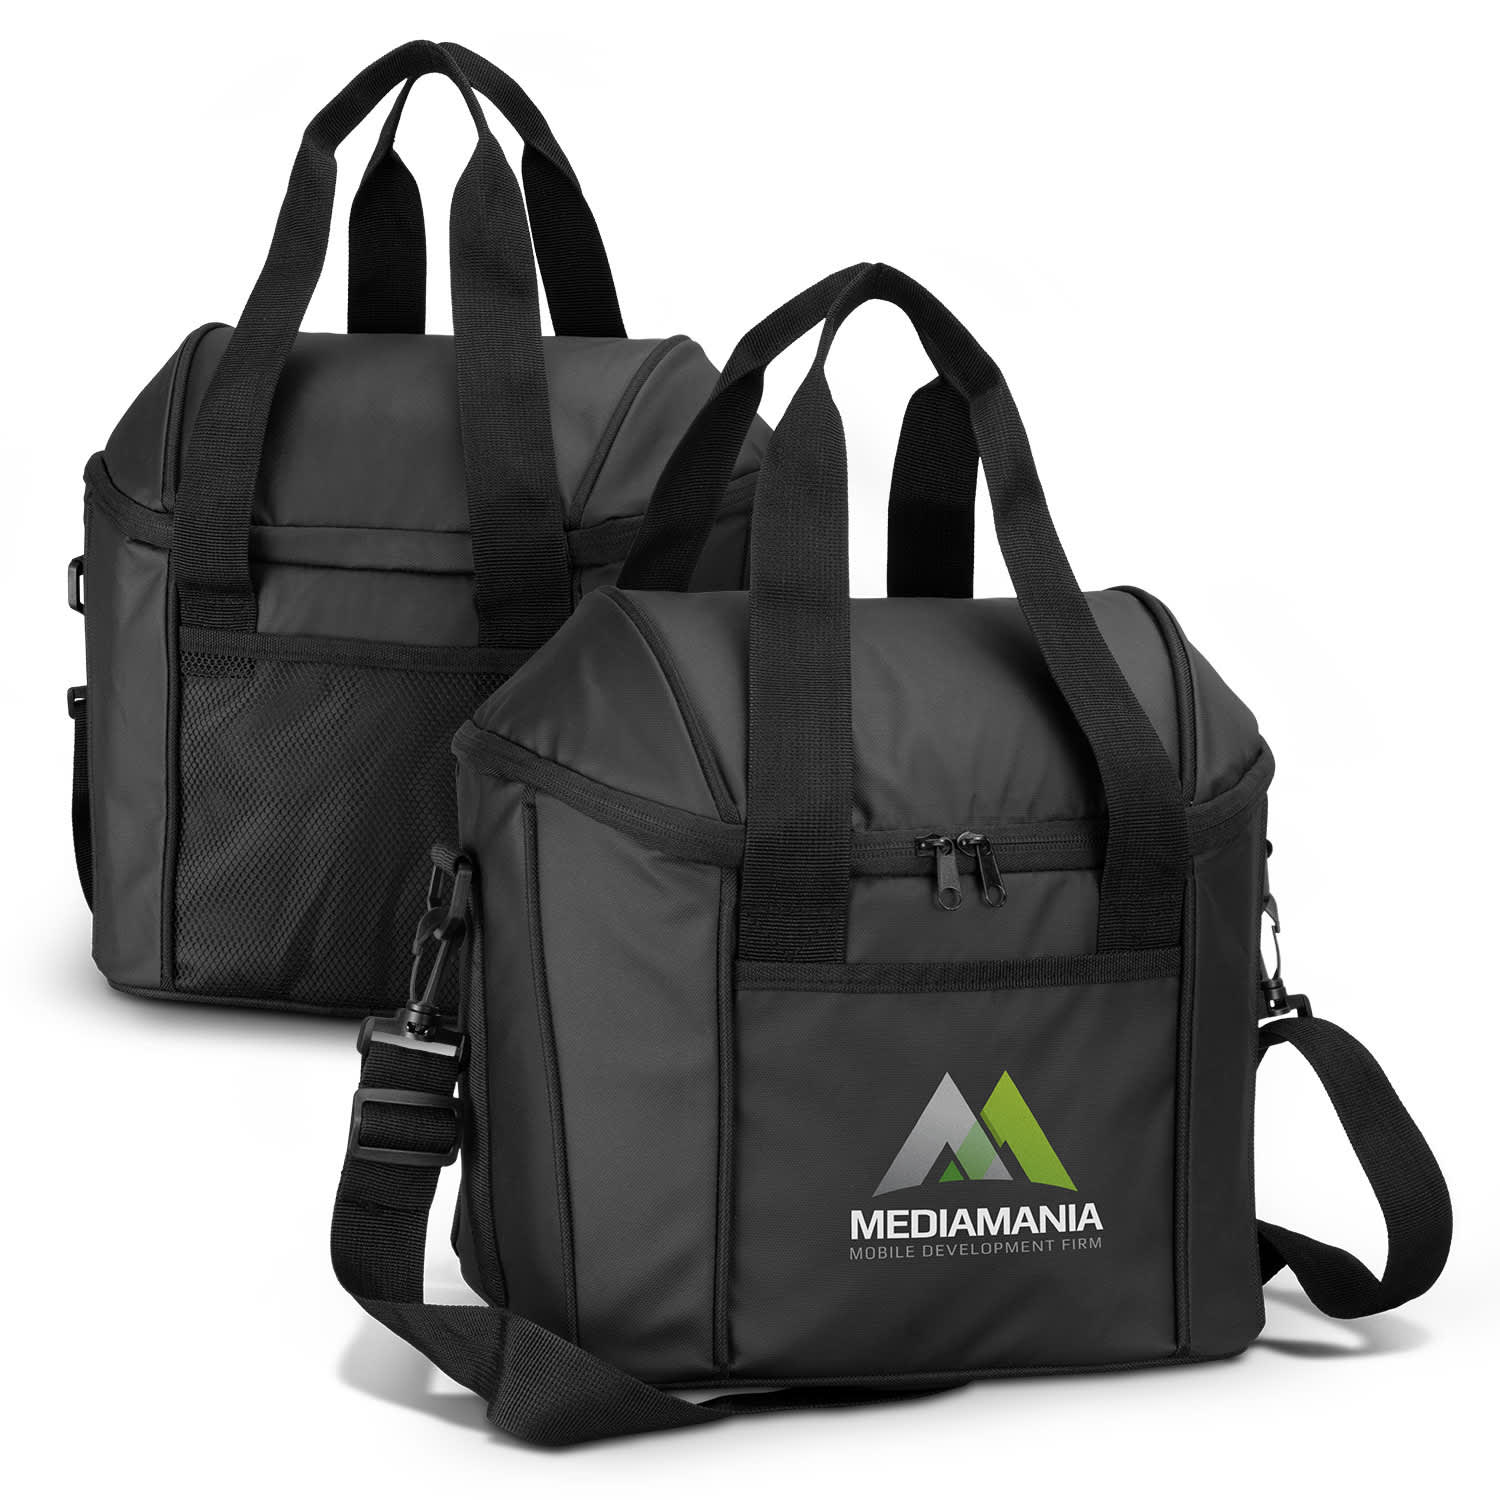 Aquinas Cooler Bag | Branded Coolers Bags | Personalised Cooler Bags